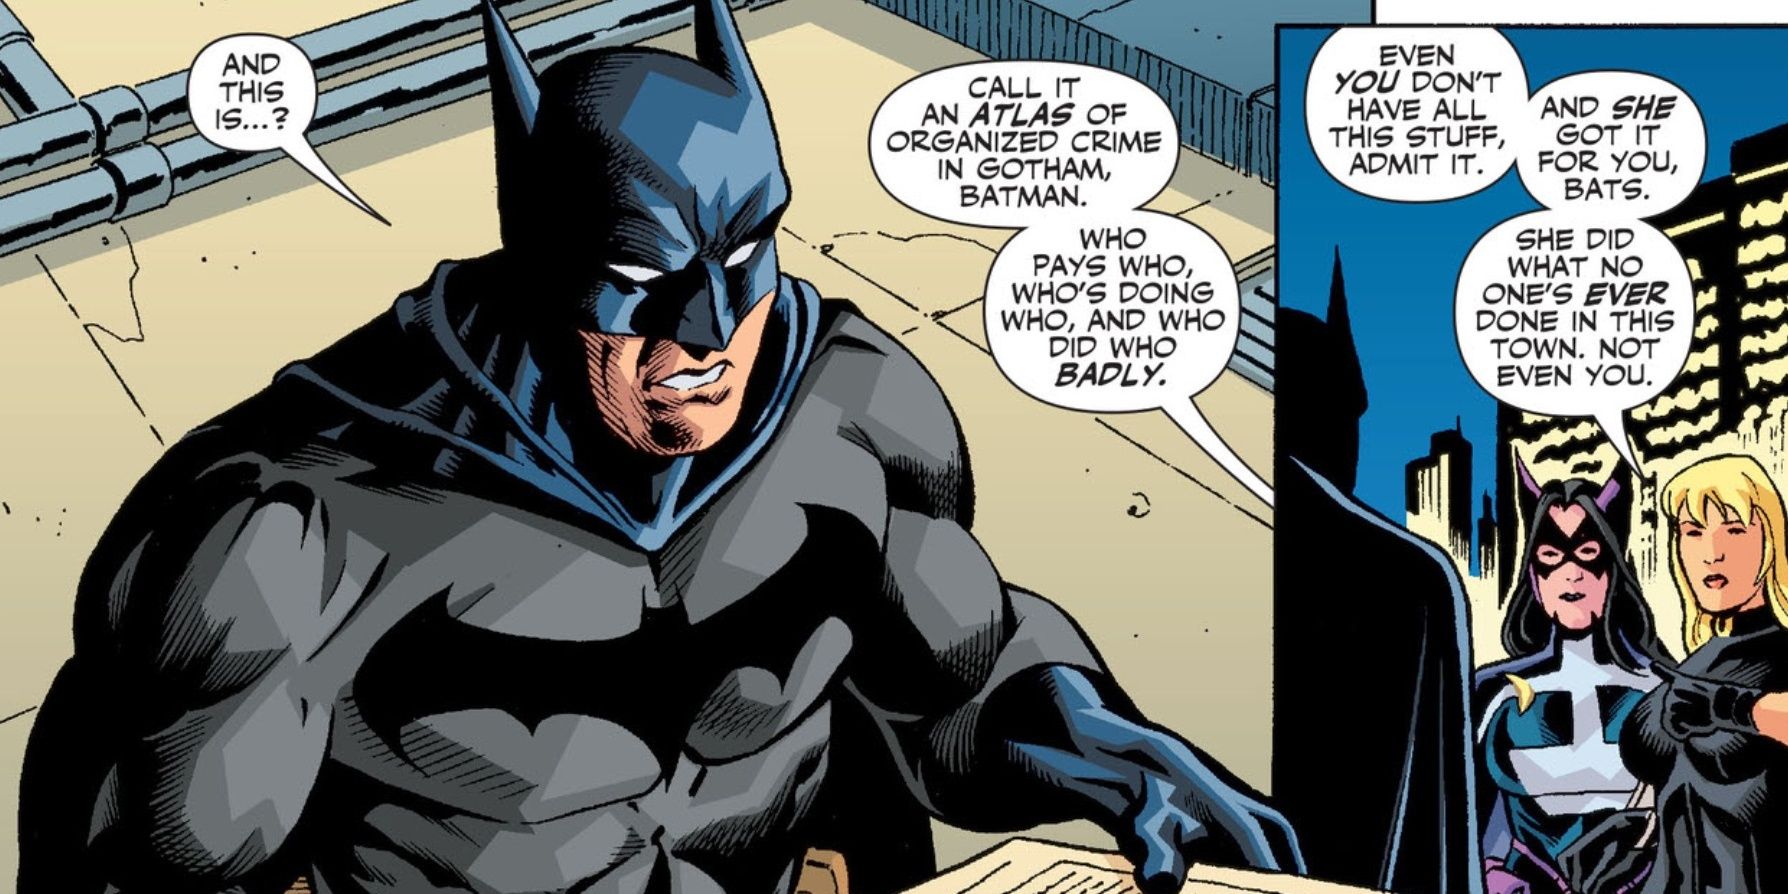 Batman, Huntress, and Black Canary discuss crime in Gotham